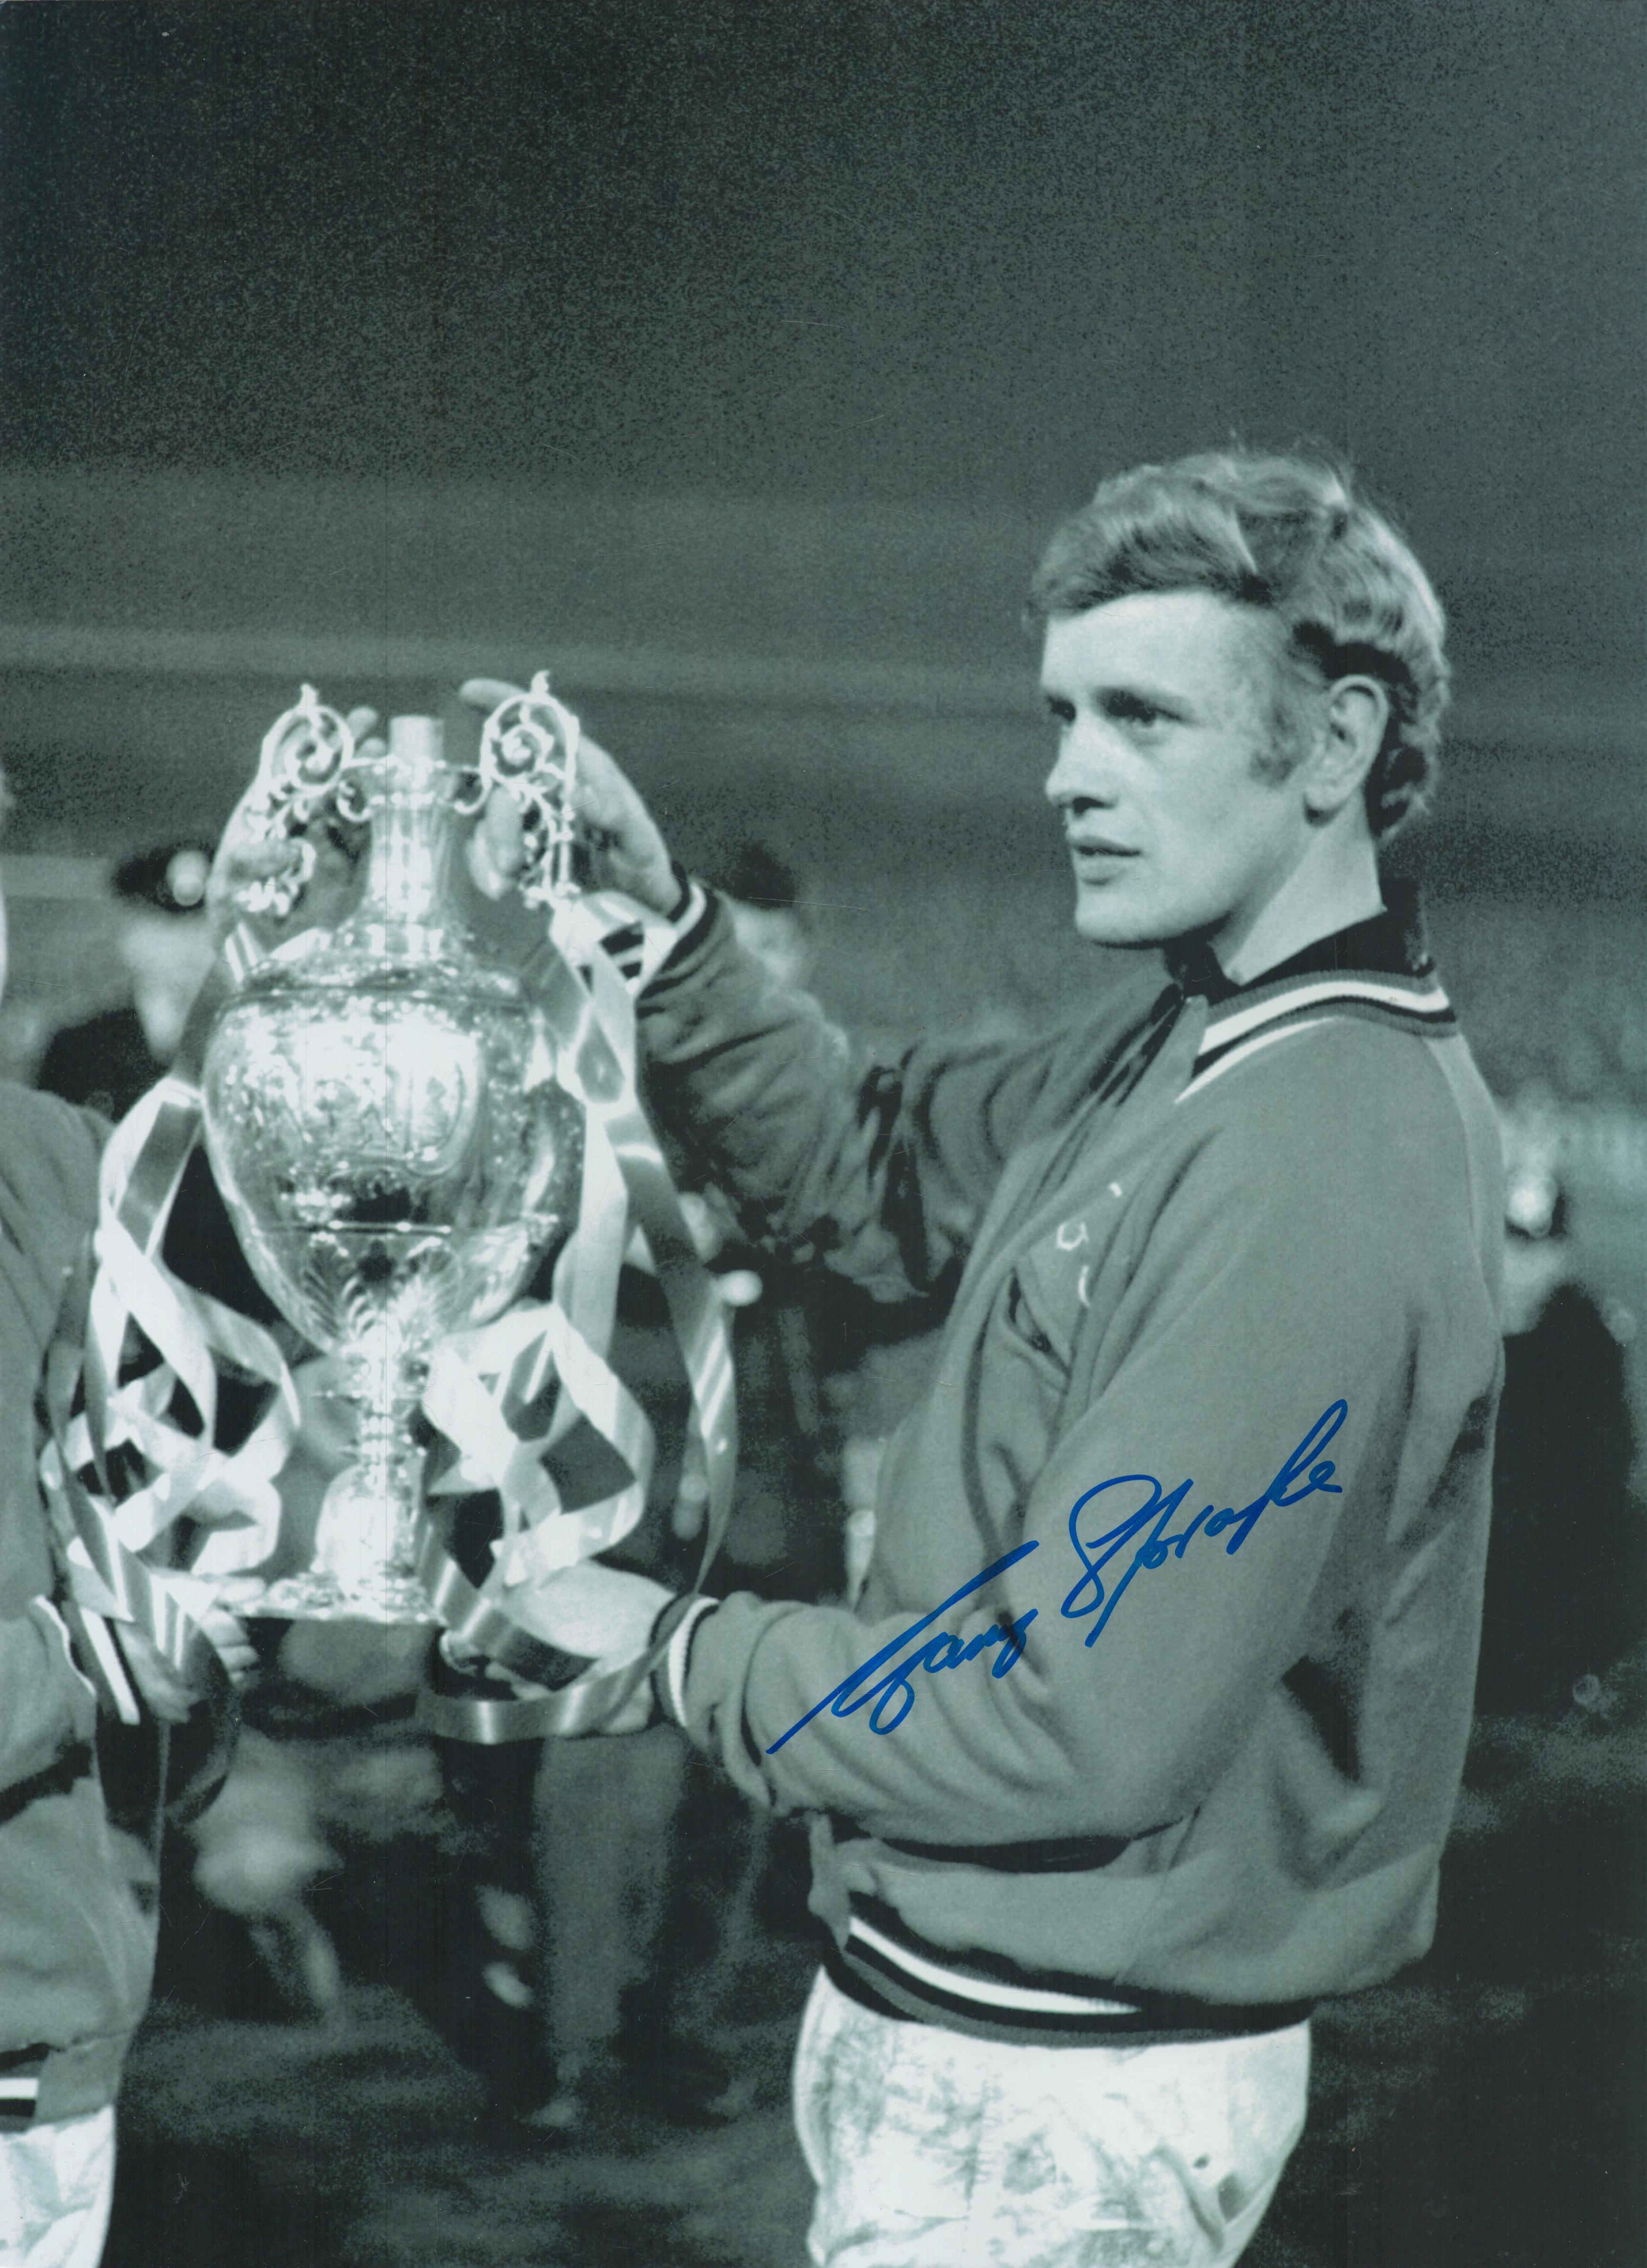 Autographed GARY SPRAKE 16 x 12 Photo : B/W, depicting Leeds United goalkeeper GARY SPRAKE posing